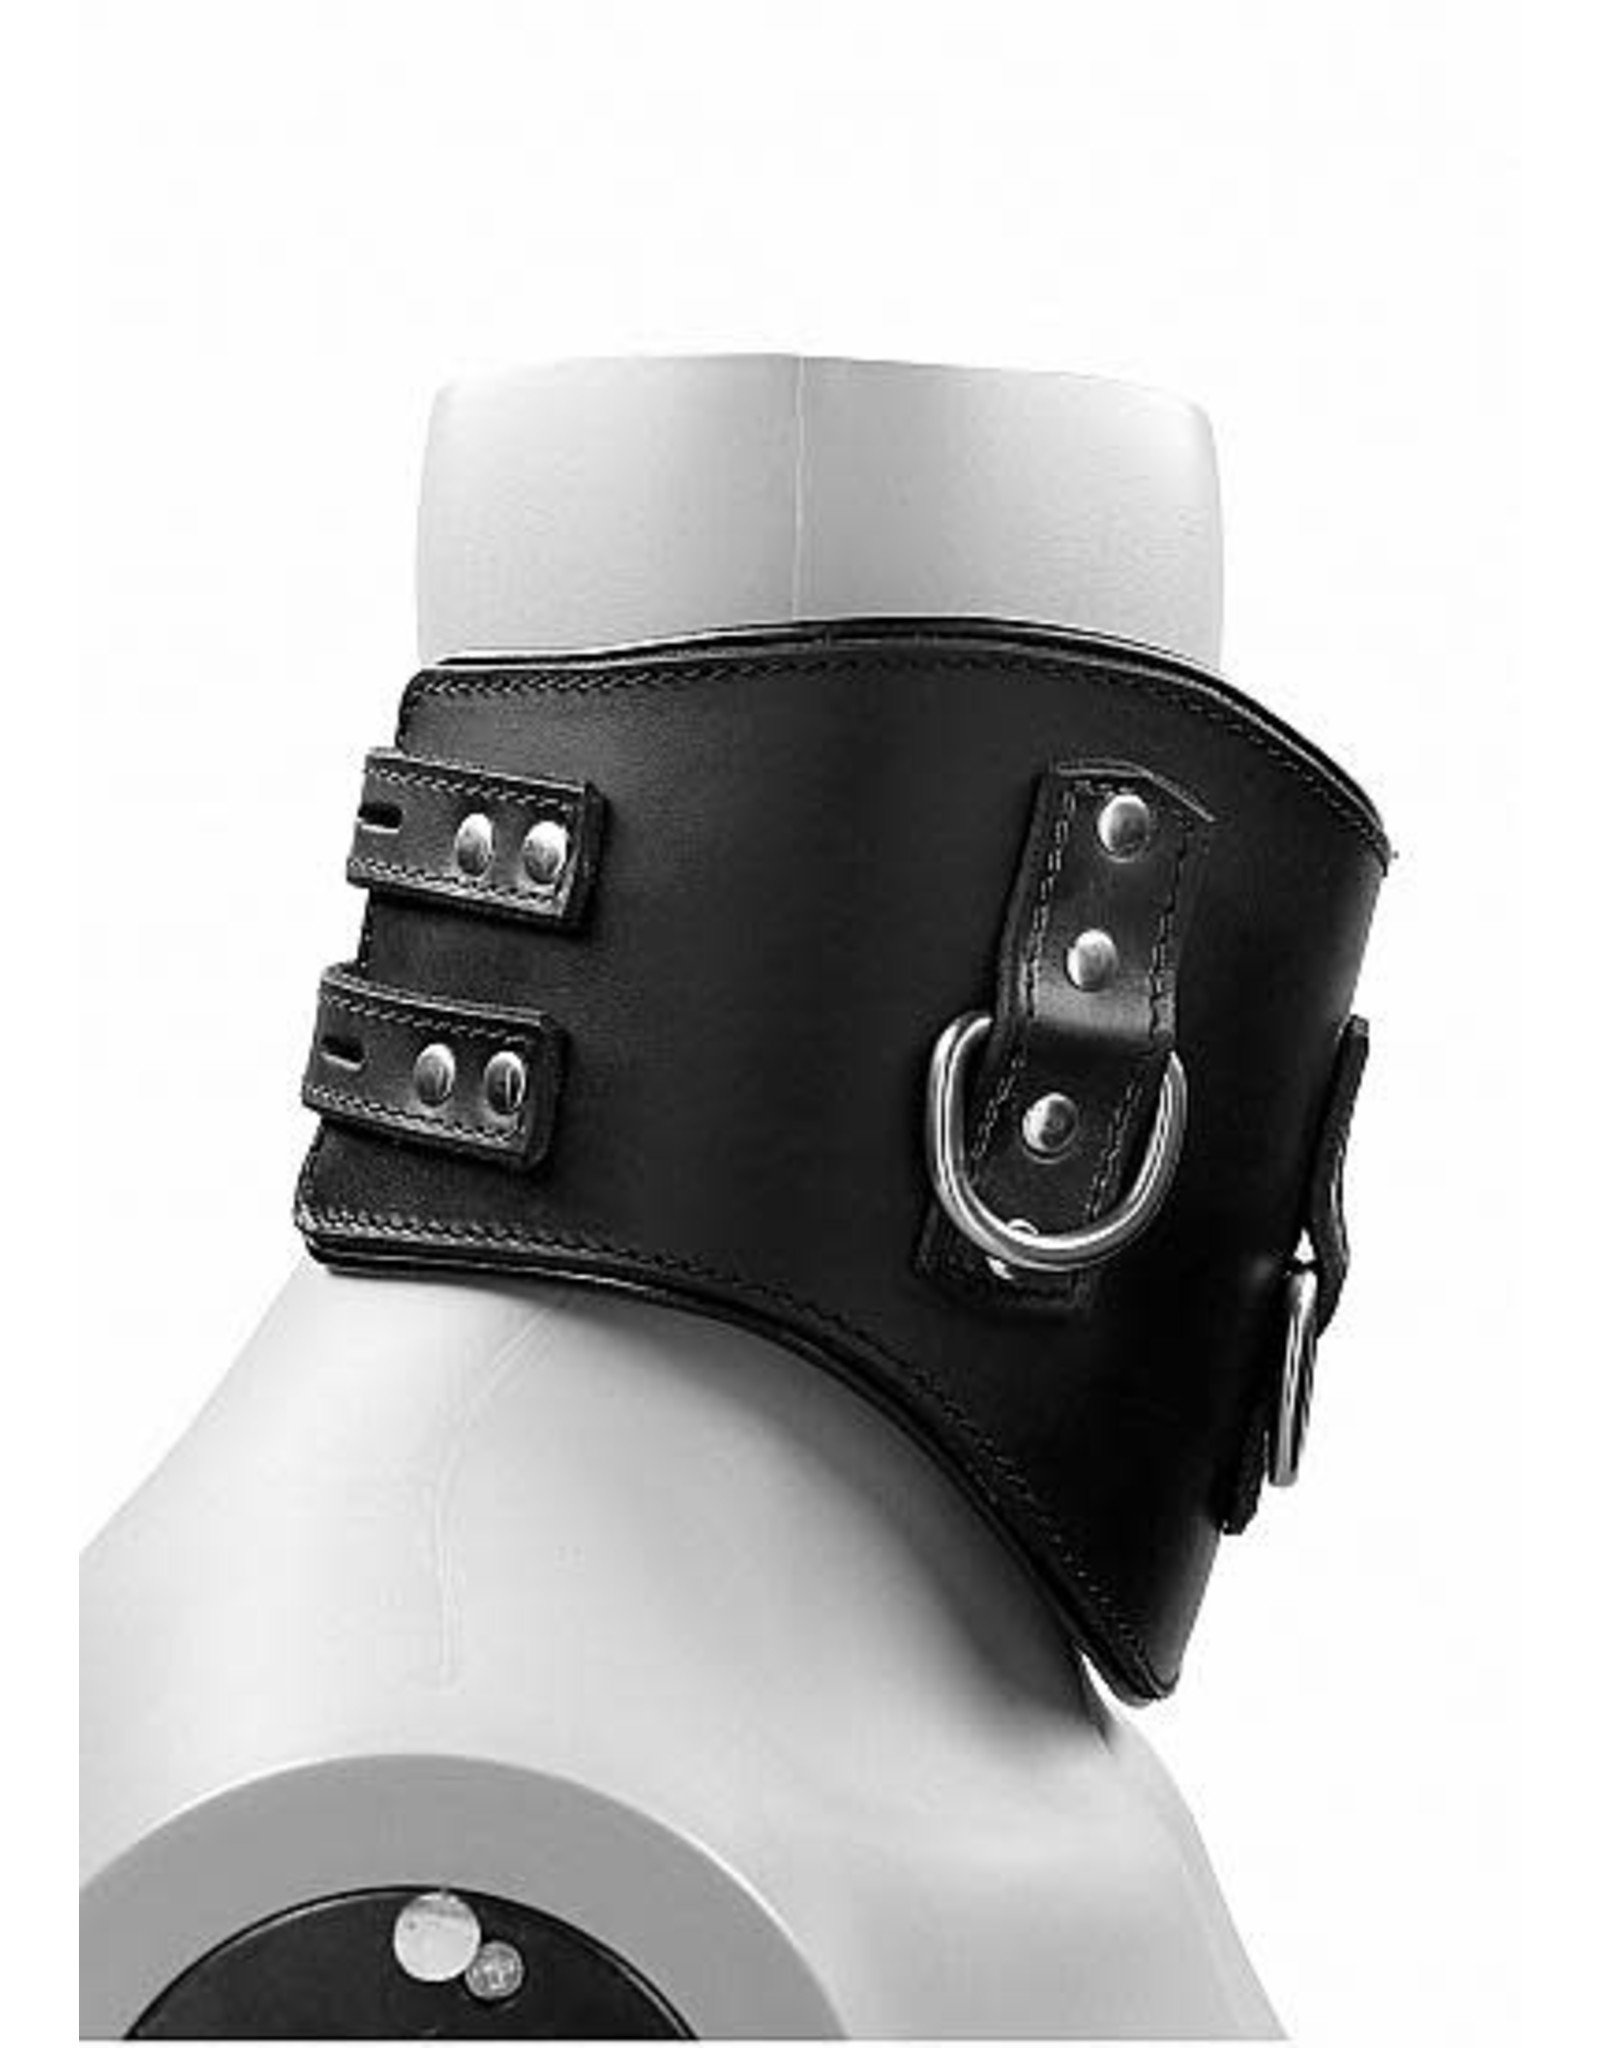 Pain - Heavy Duty Leather Padded Posture Collar - SensationO